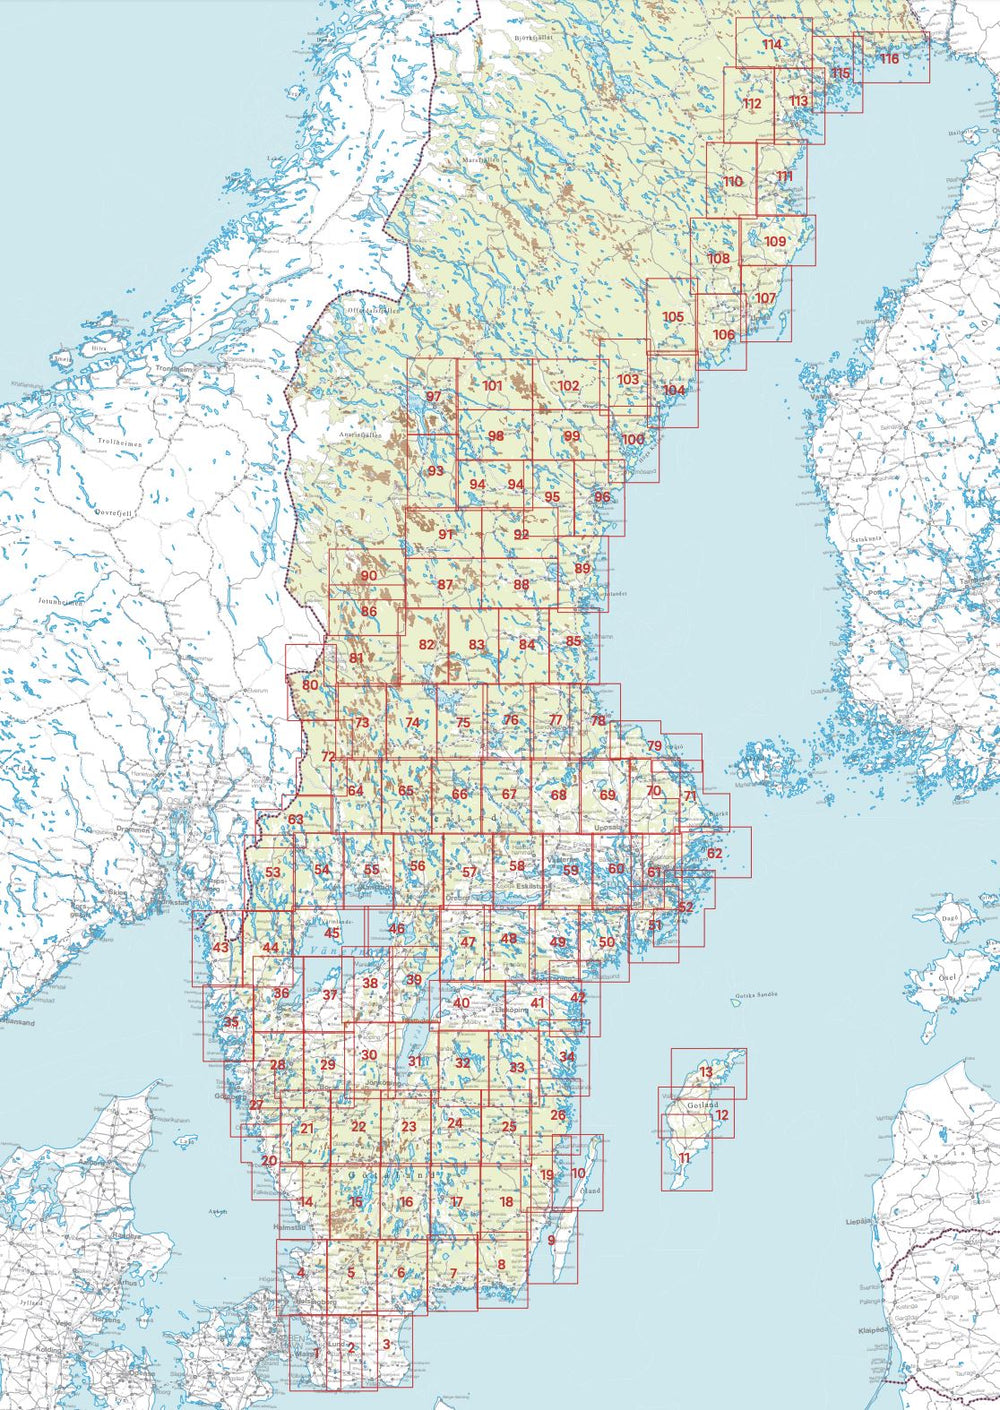 Carte topographique n° 29 - Borås (Suède) | Norstedts - Sverigeserien carte pliée Norstedts 